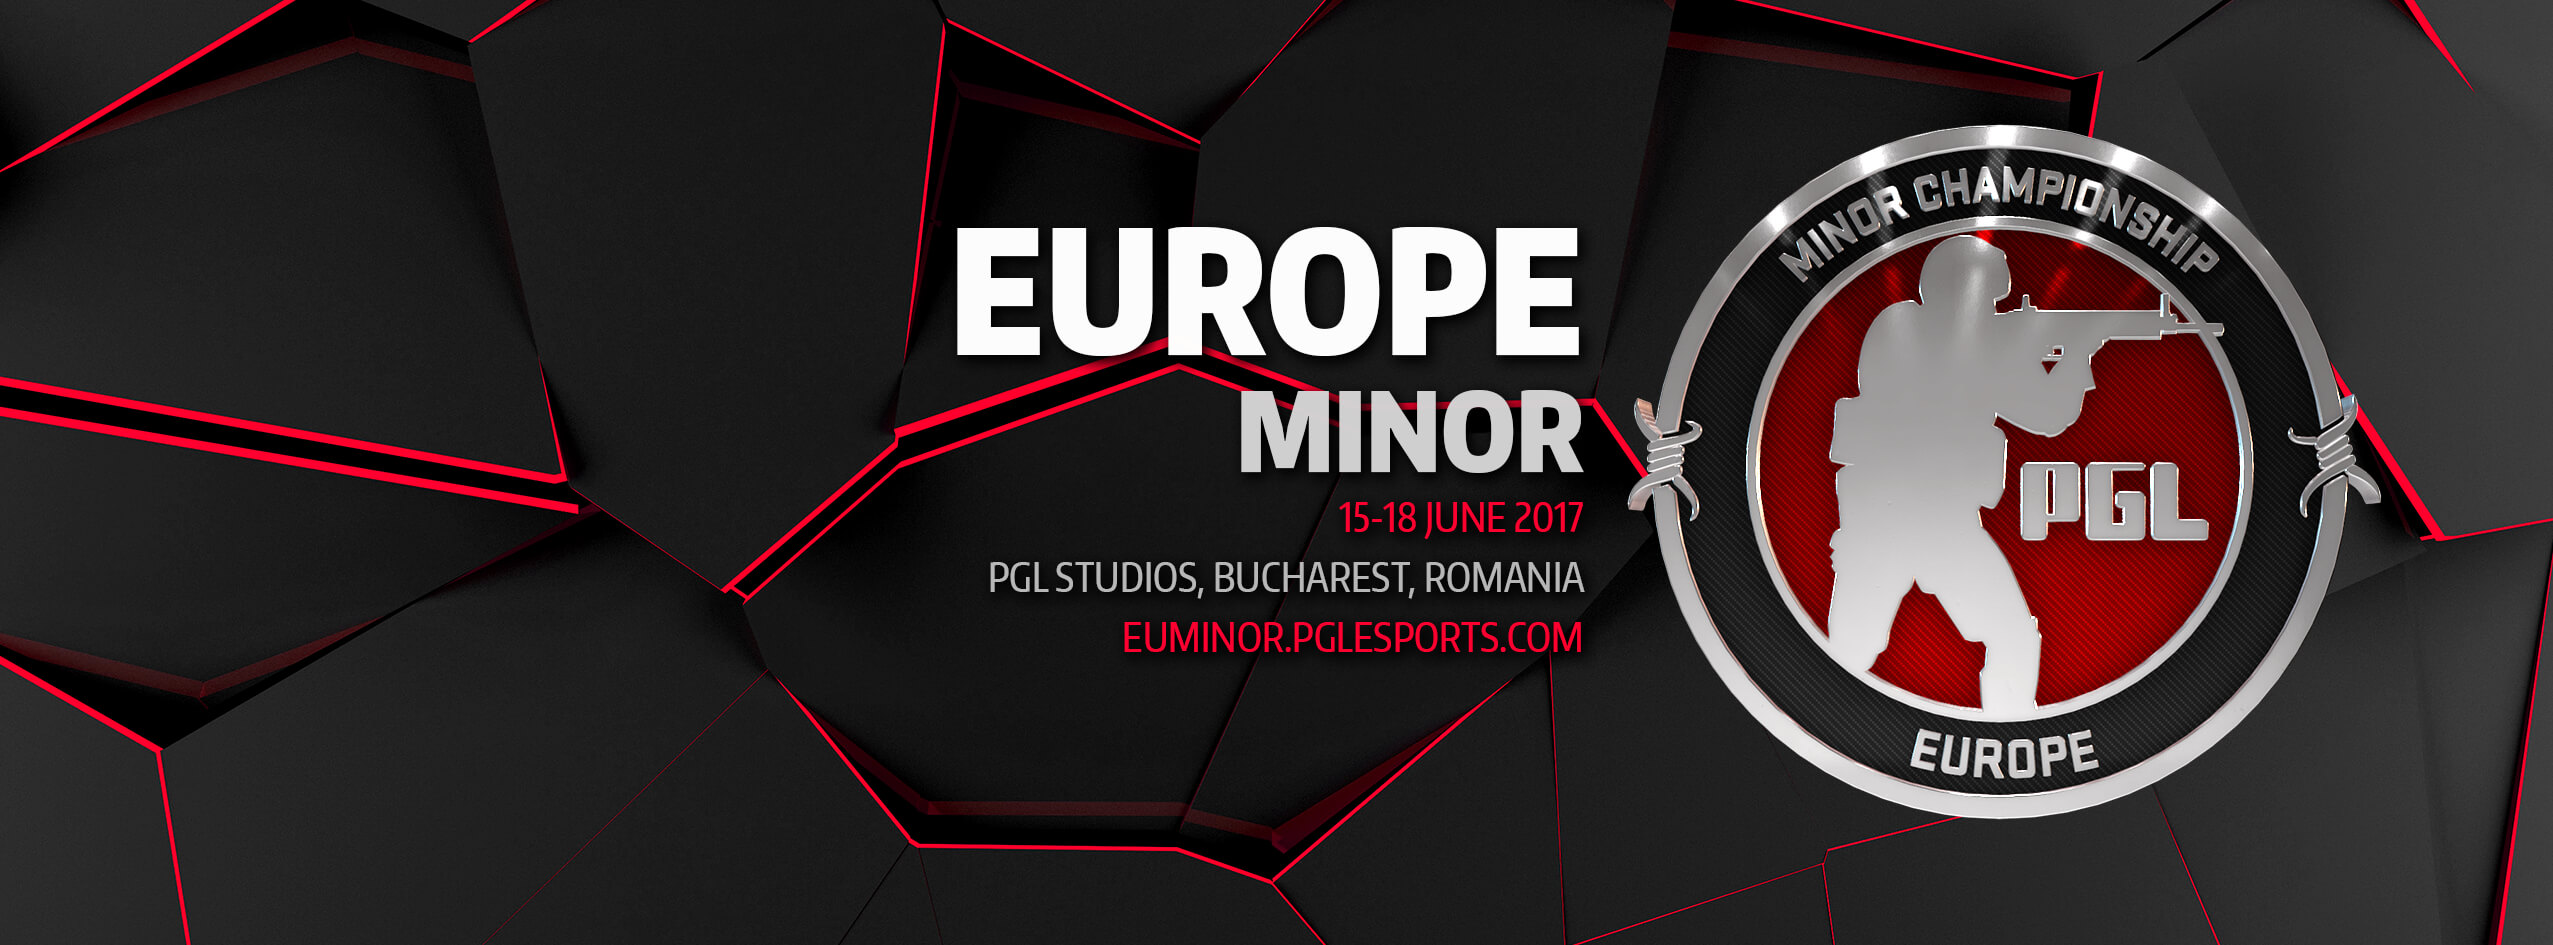 European Minor Championship